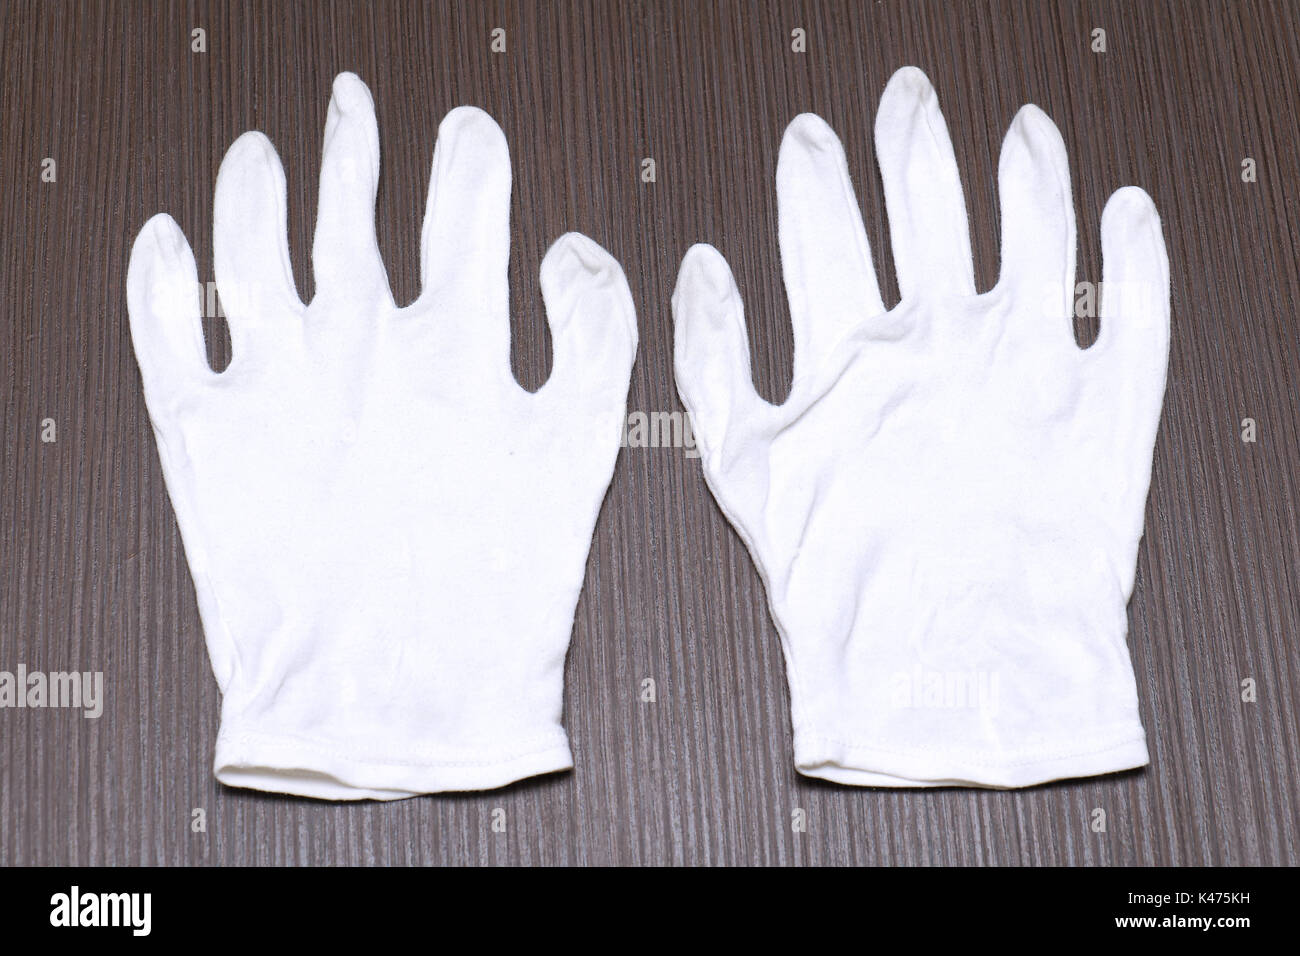 White cotton gloves on wooden background Stock Photo - Alamy